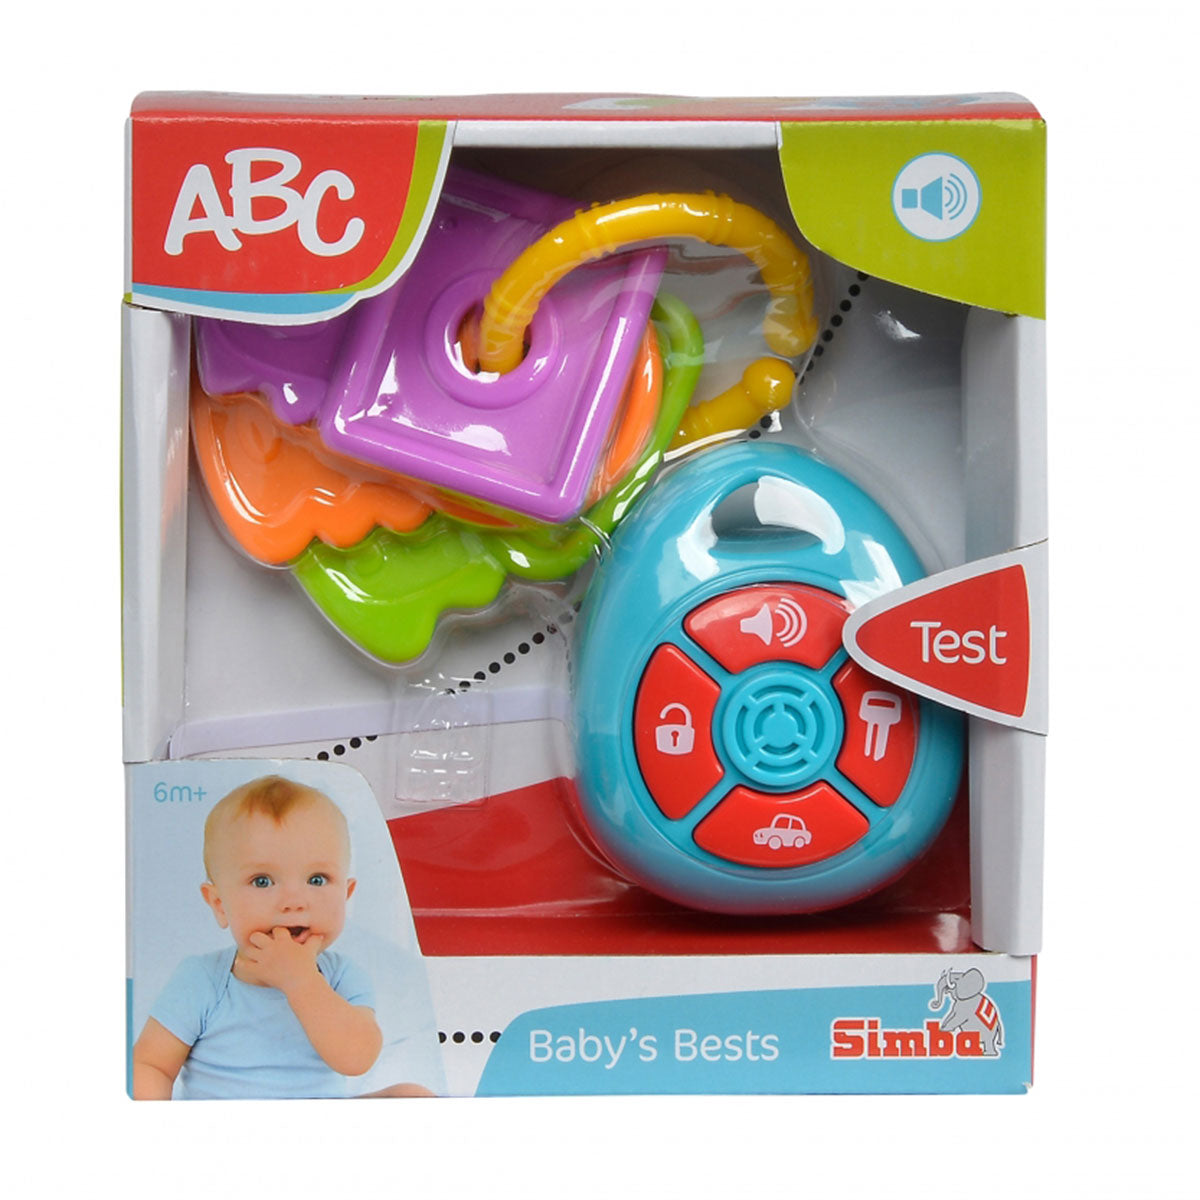 Simba - Baby's Bests ABC Car Keys